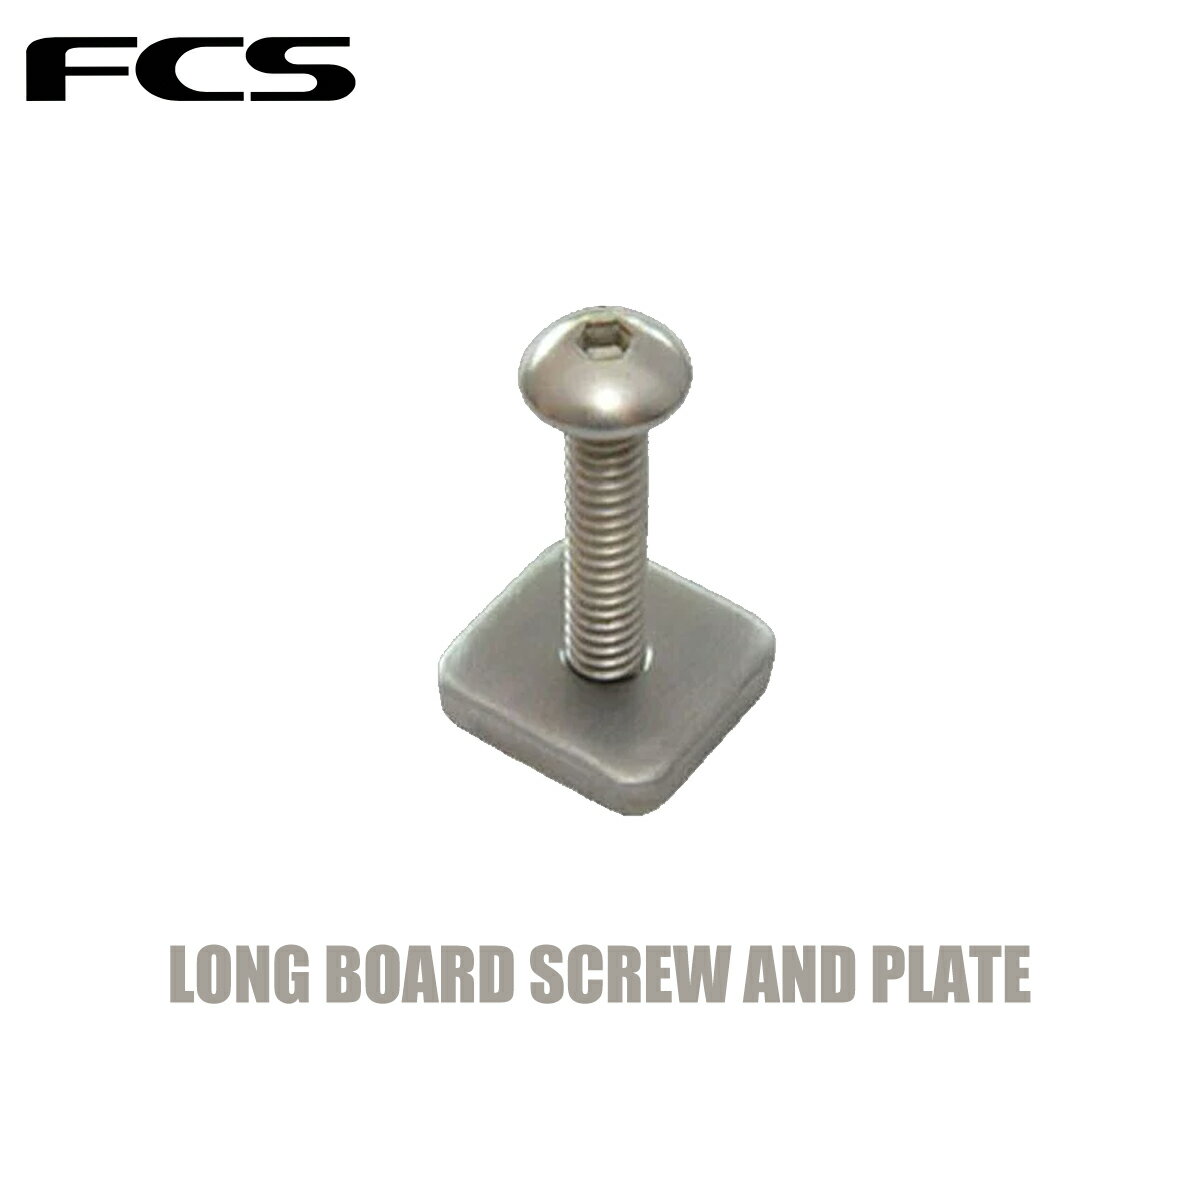 FCS ロングボードボックス用CSキー対応ネジ ロングボードスクリュ プレート ボックスフィン サーフィン サーフフィン LONG BOARD SCREW AND PLATE 正規品